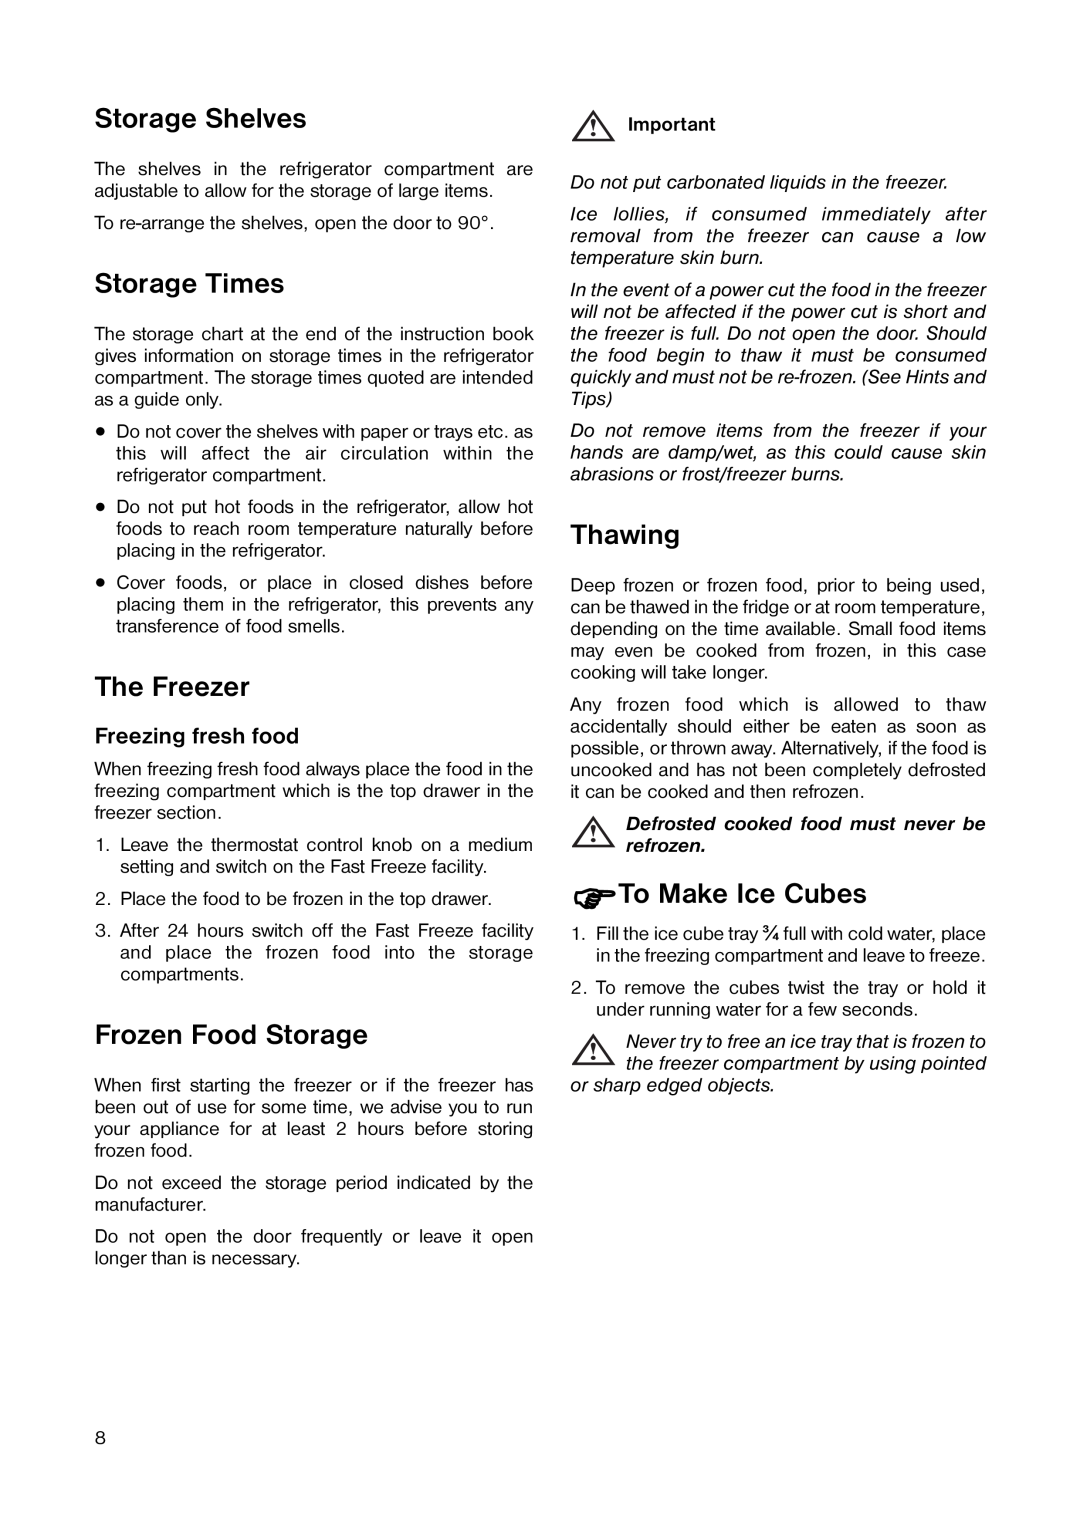 Zanussi Z 97/4 W manual Storage Shelves, Storage Times, The Freezer, Frozen Food Storage, Thawing, ΦTo Make Ice Cubes 